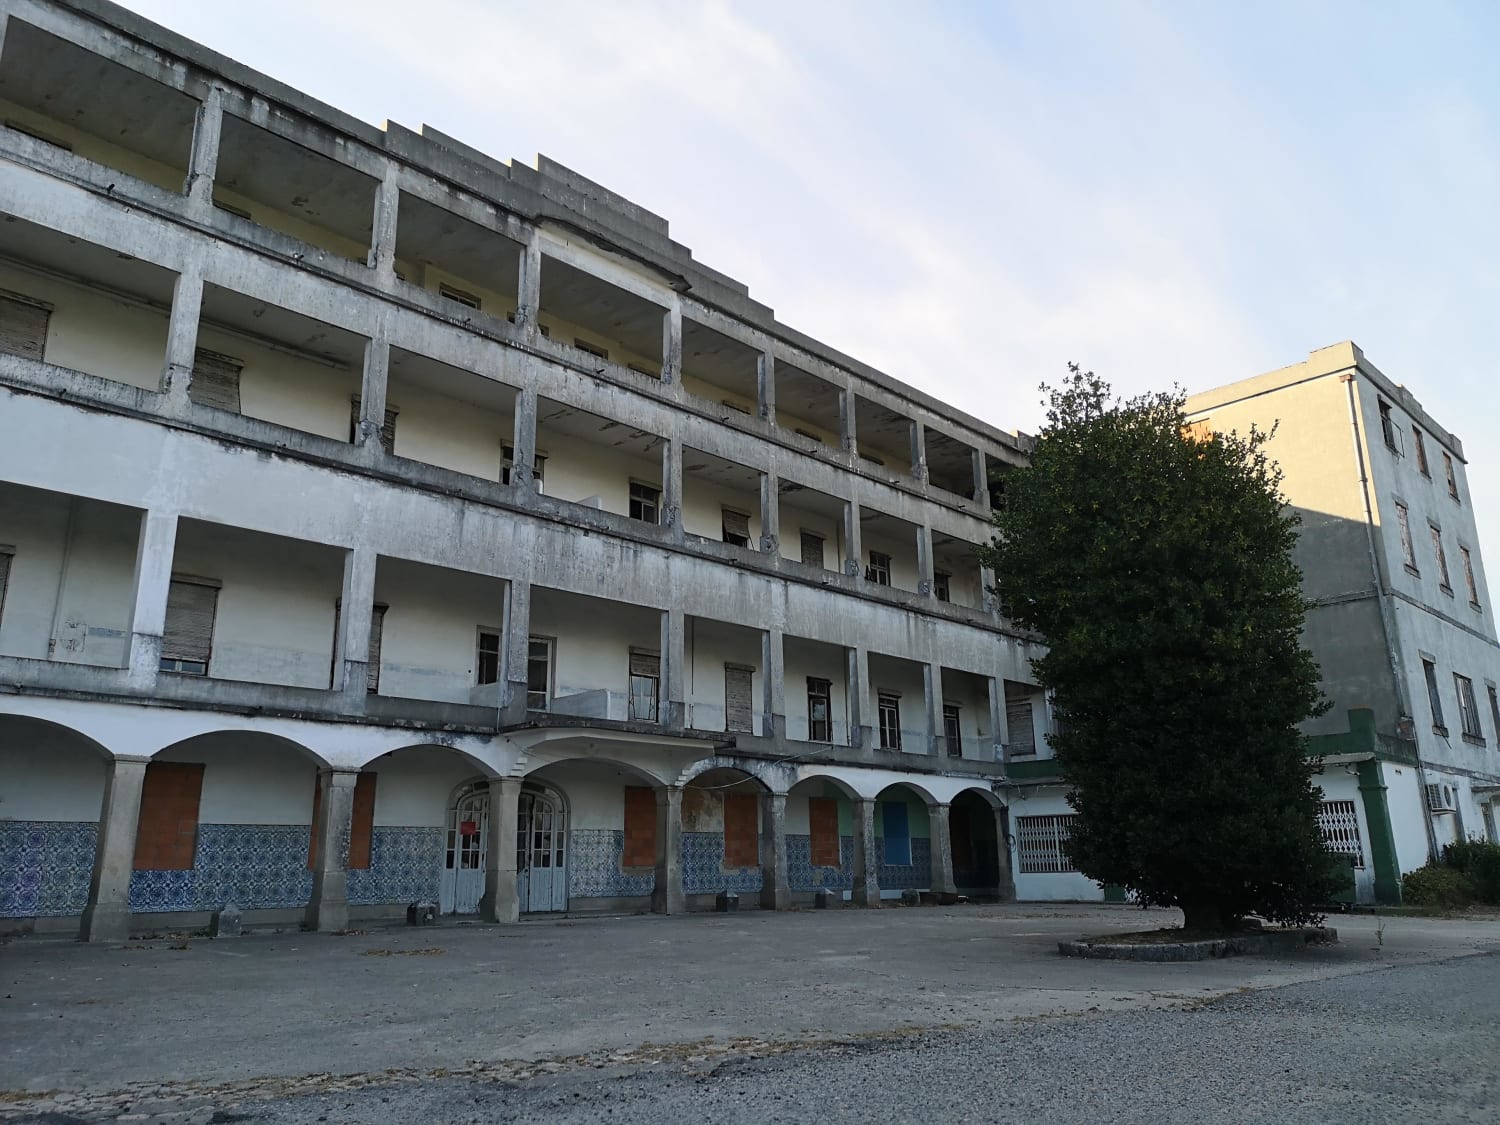 An abandoned sanatorium in Portugal